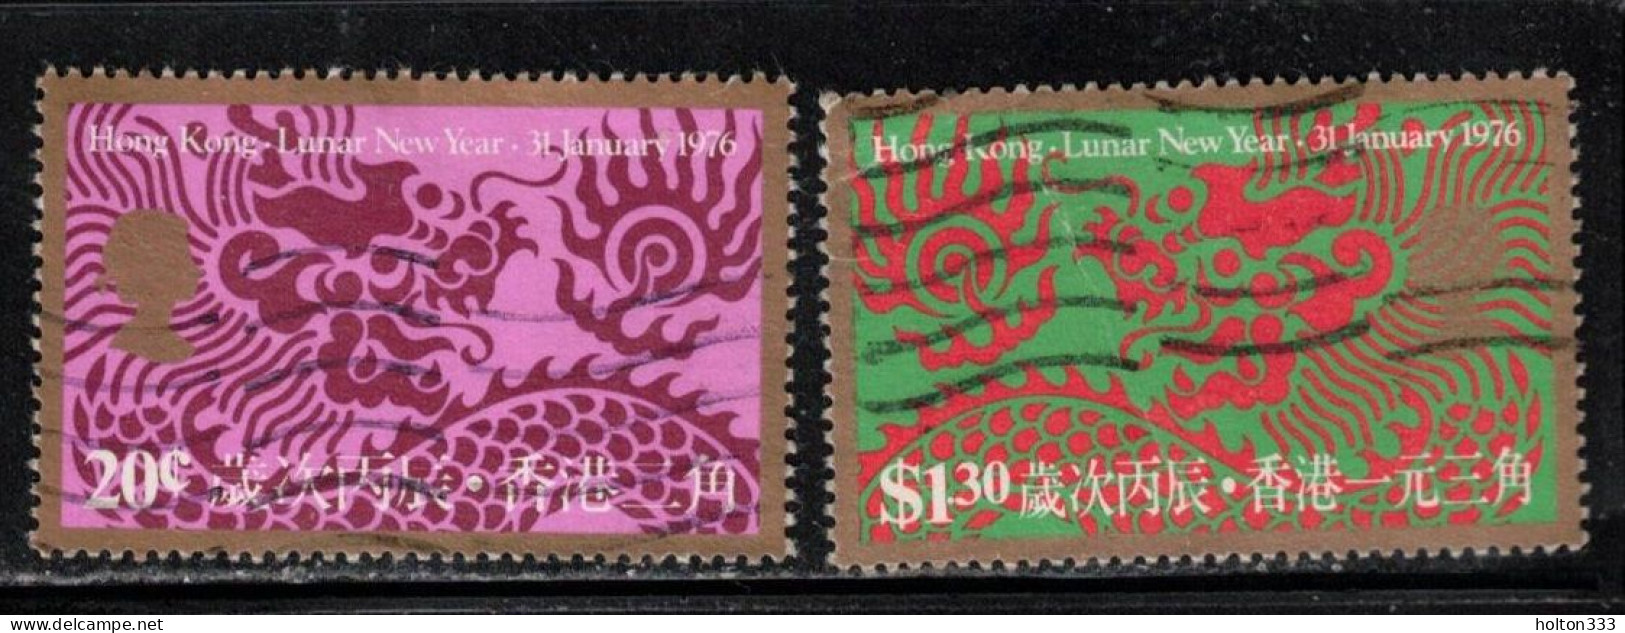 HONG KONG Scott # 312-13 Used - Lunar New Year 1976 - Usati